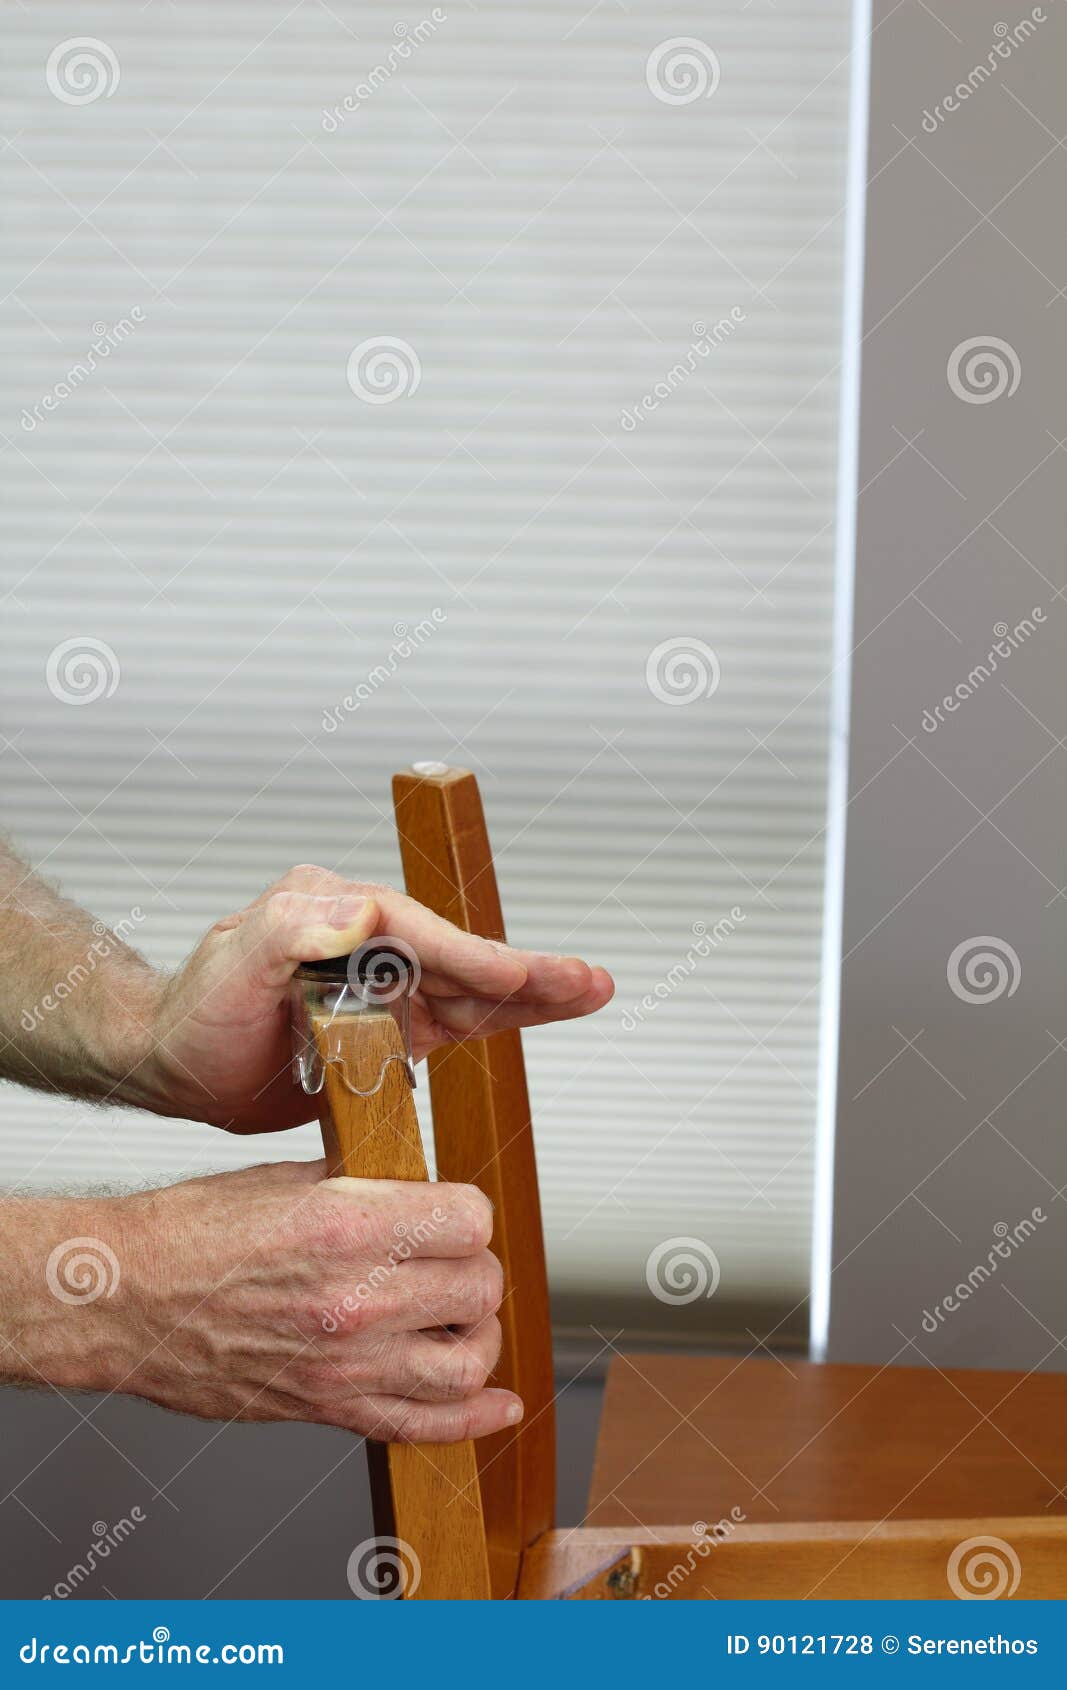 Hands Installing Clear Floor Protectors Stock Photo Image Of